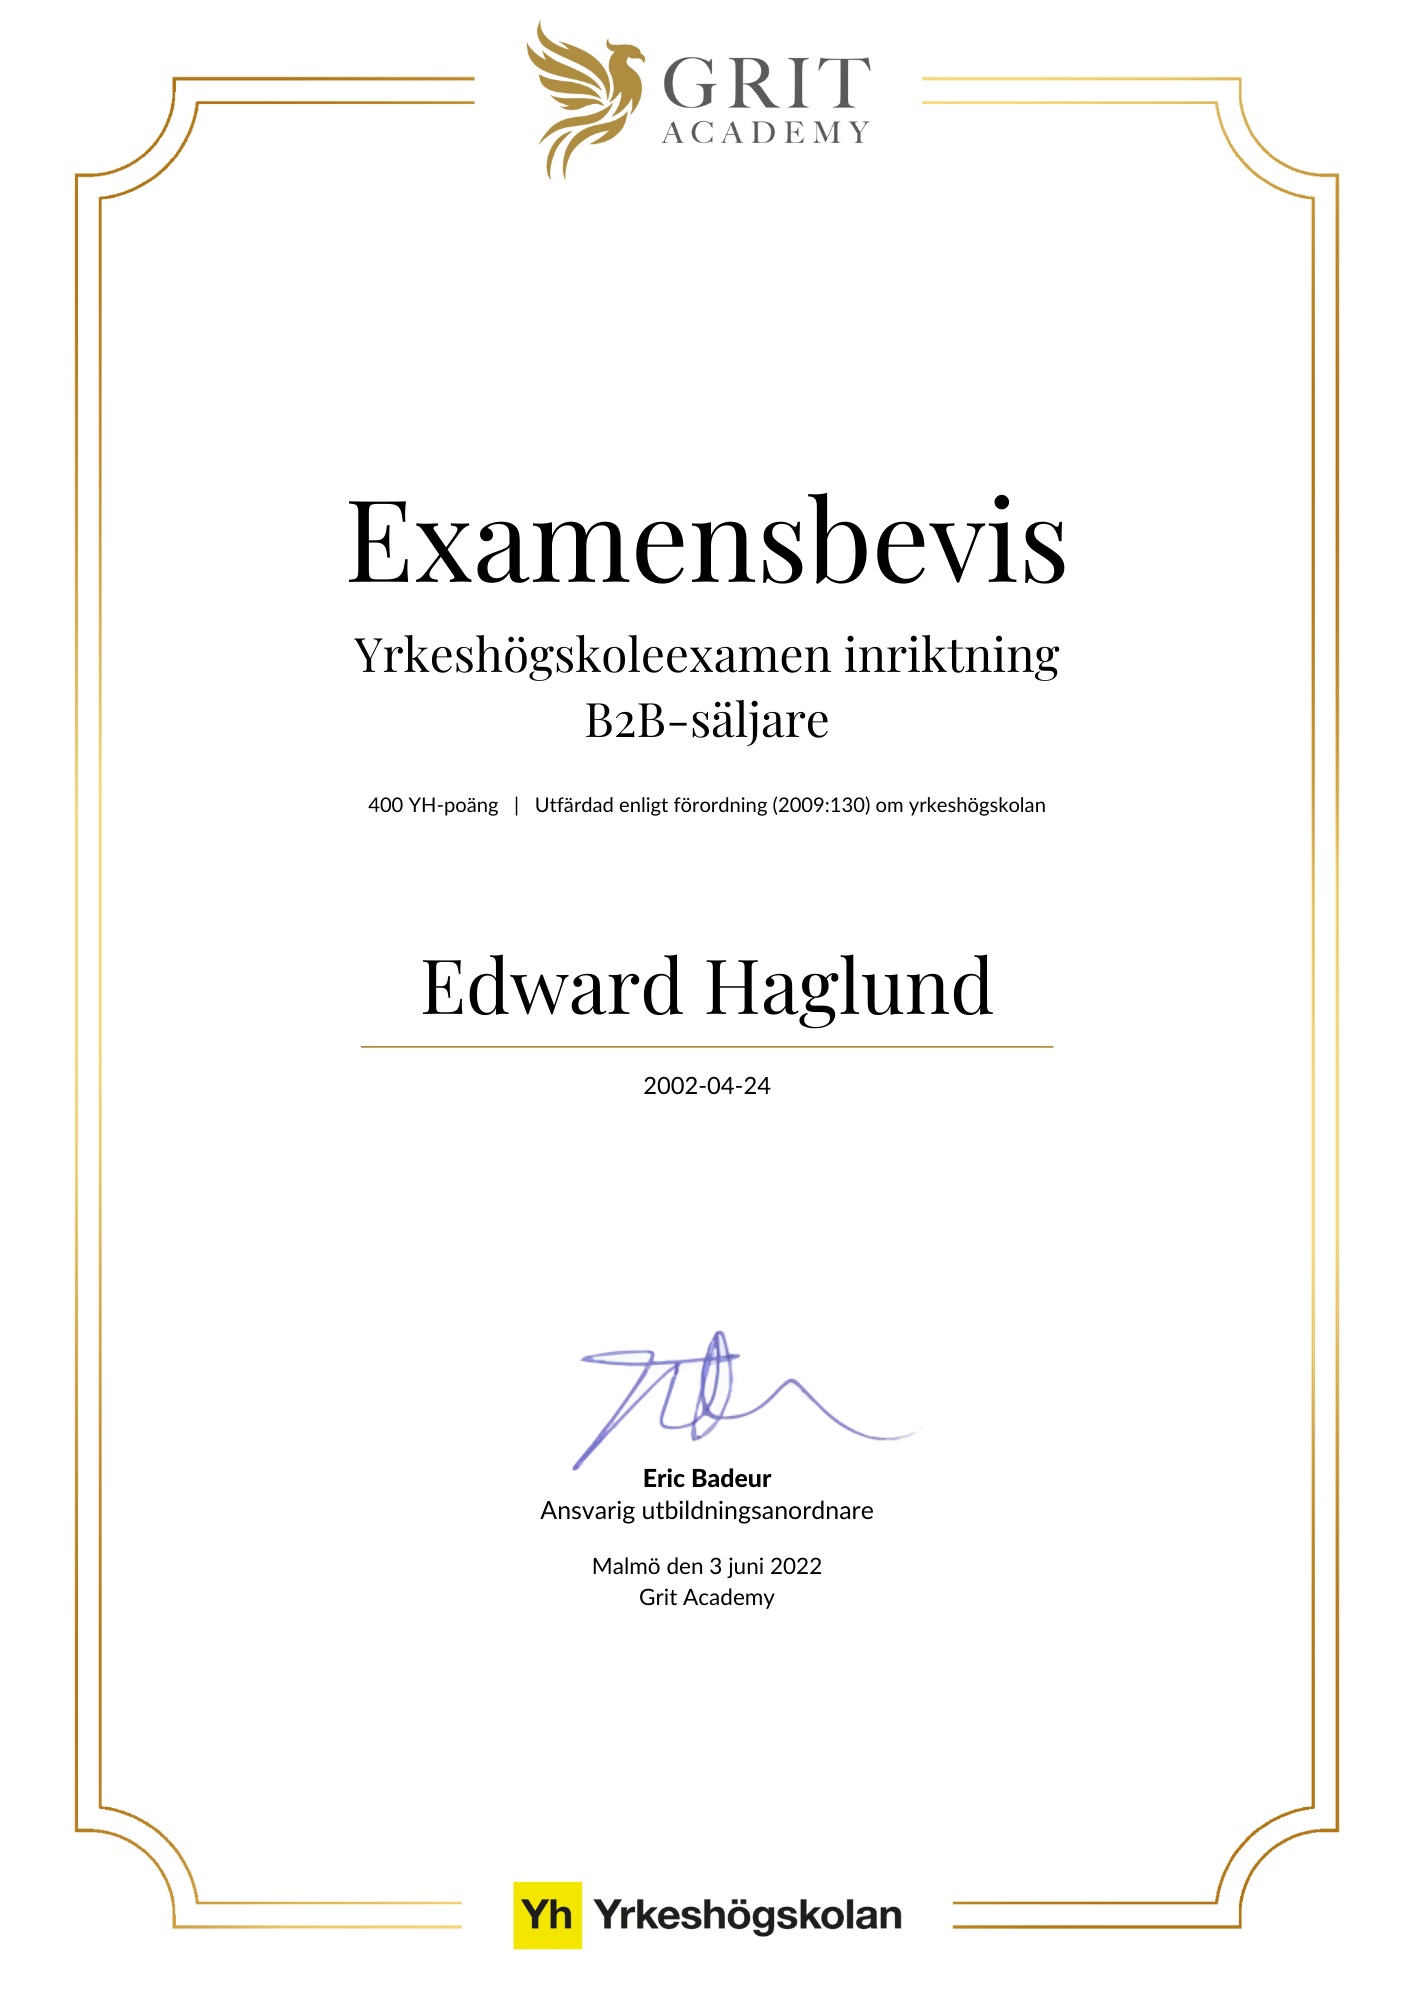 Examensbevis Edward Haglund